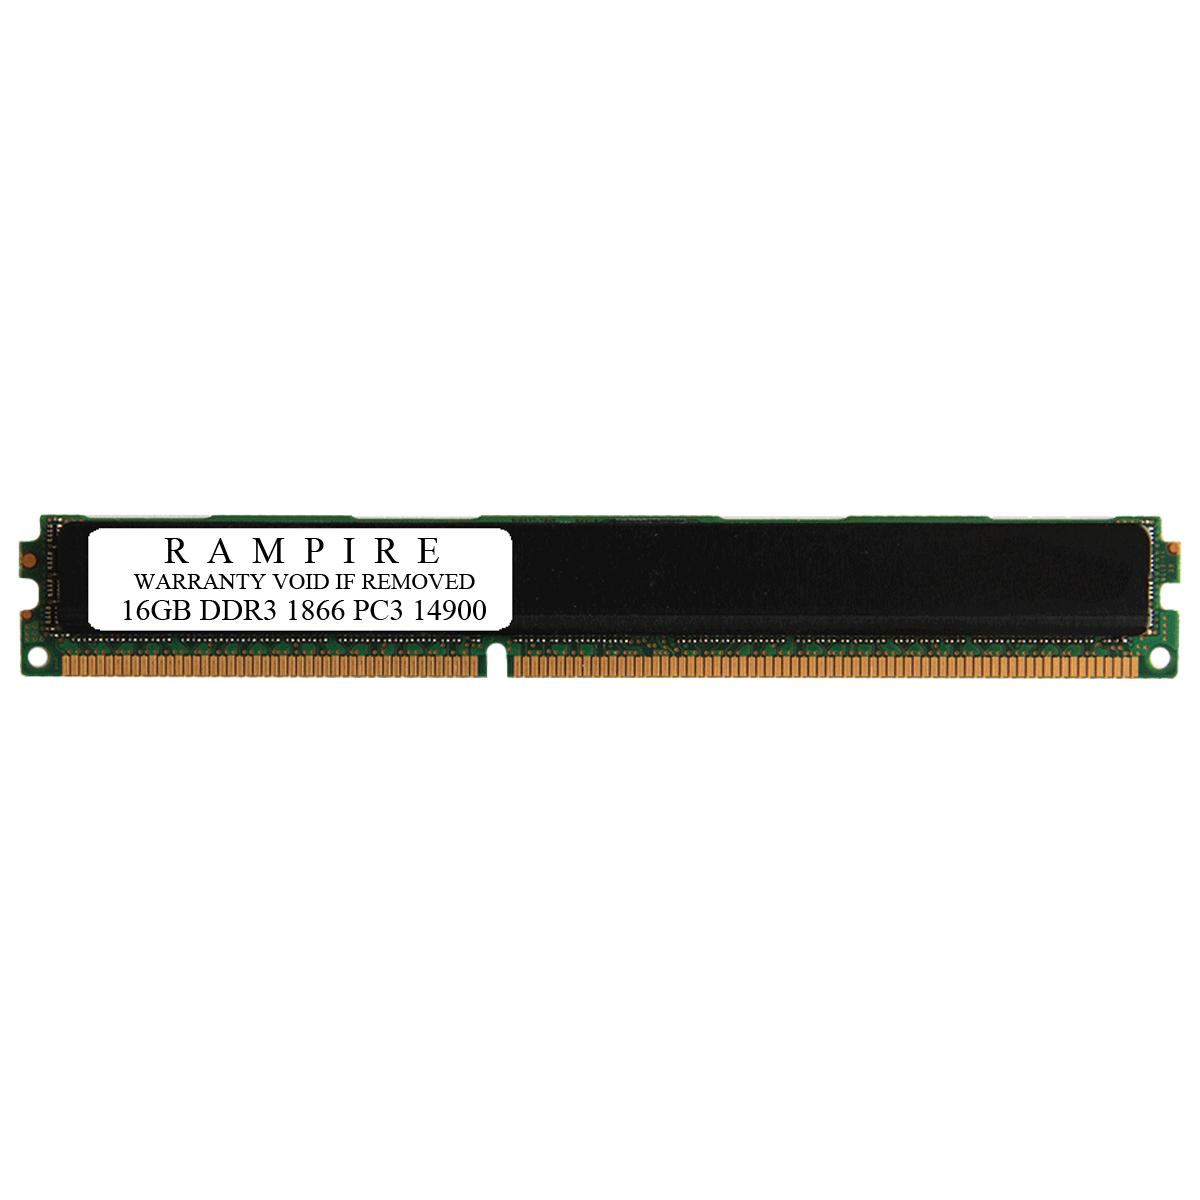 RAMPIRE 16GB DDR3 1866 (PC3 14900) 240-Pin SDRAM 2Rx4 VLP (Low Profile) 1.5V ECC Registered Server Memory